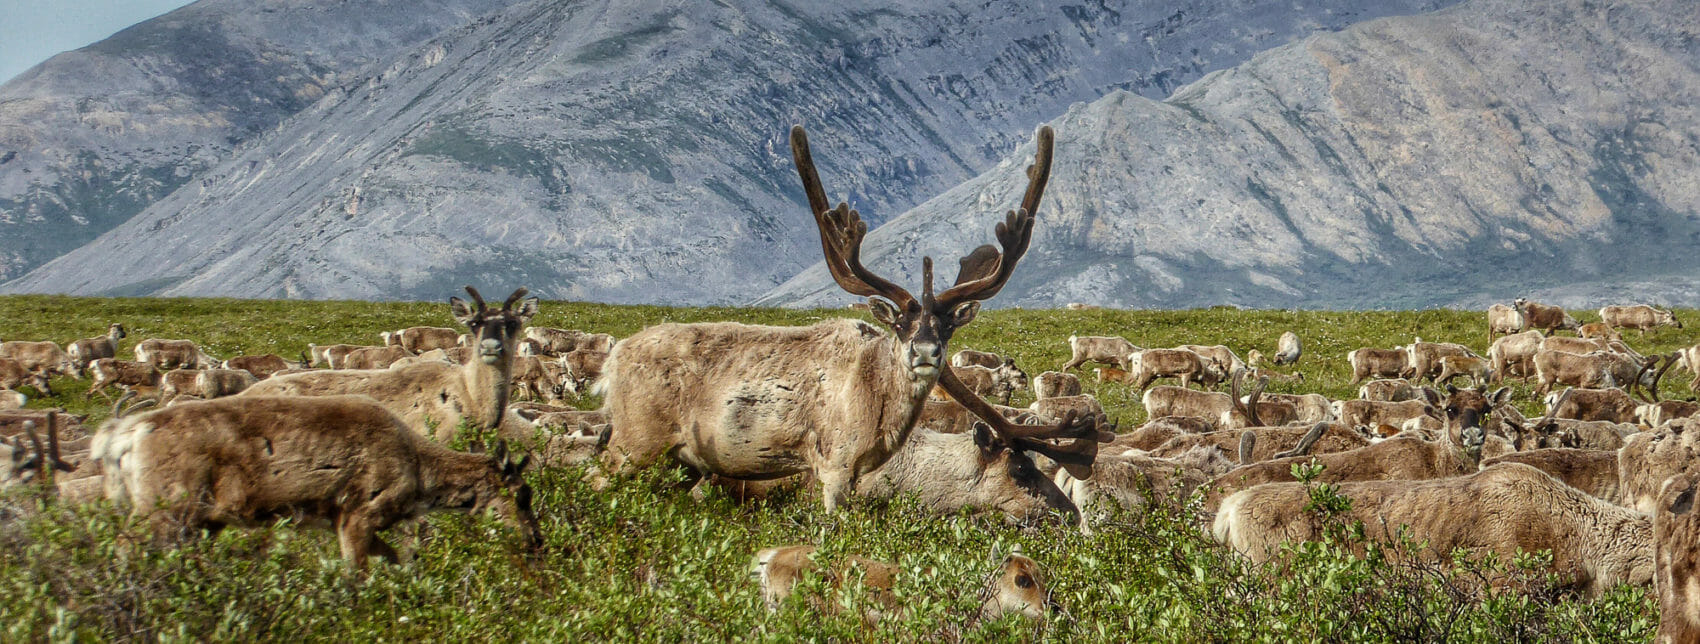 caribou bull and herd in anwr